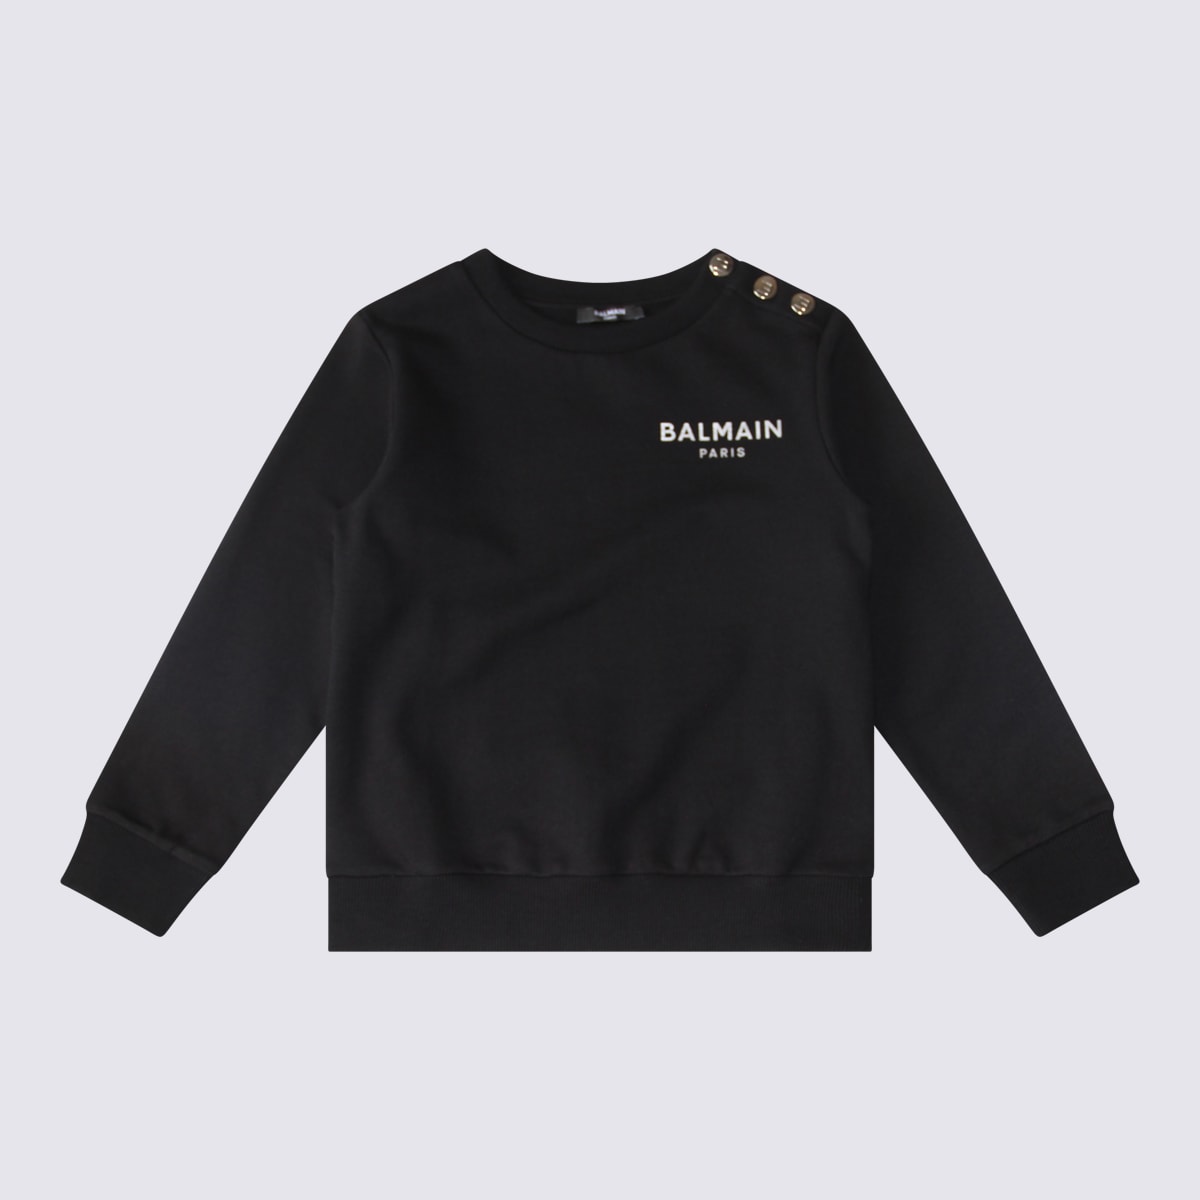 Shop Balmain Black And Silver Sweatshirt